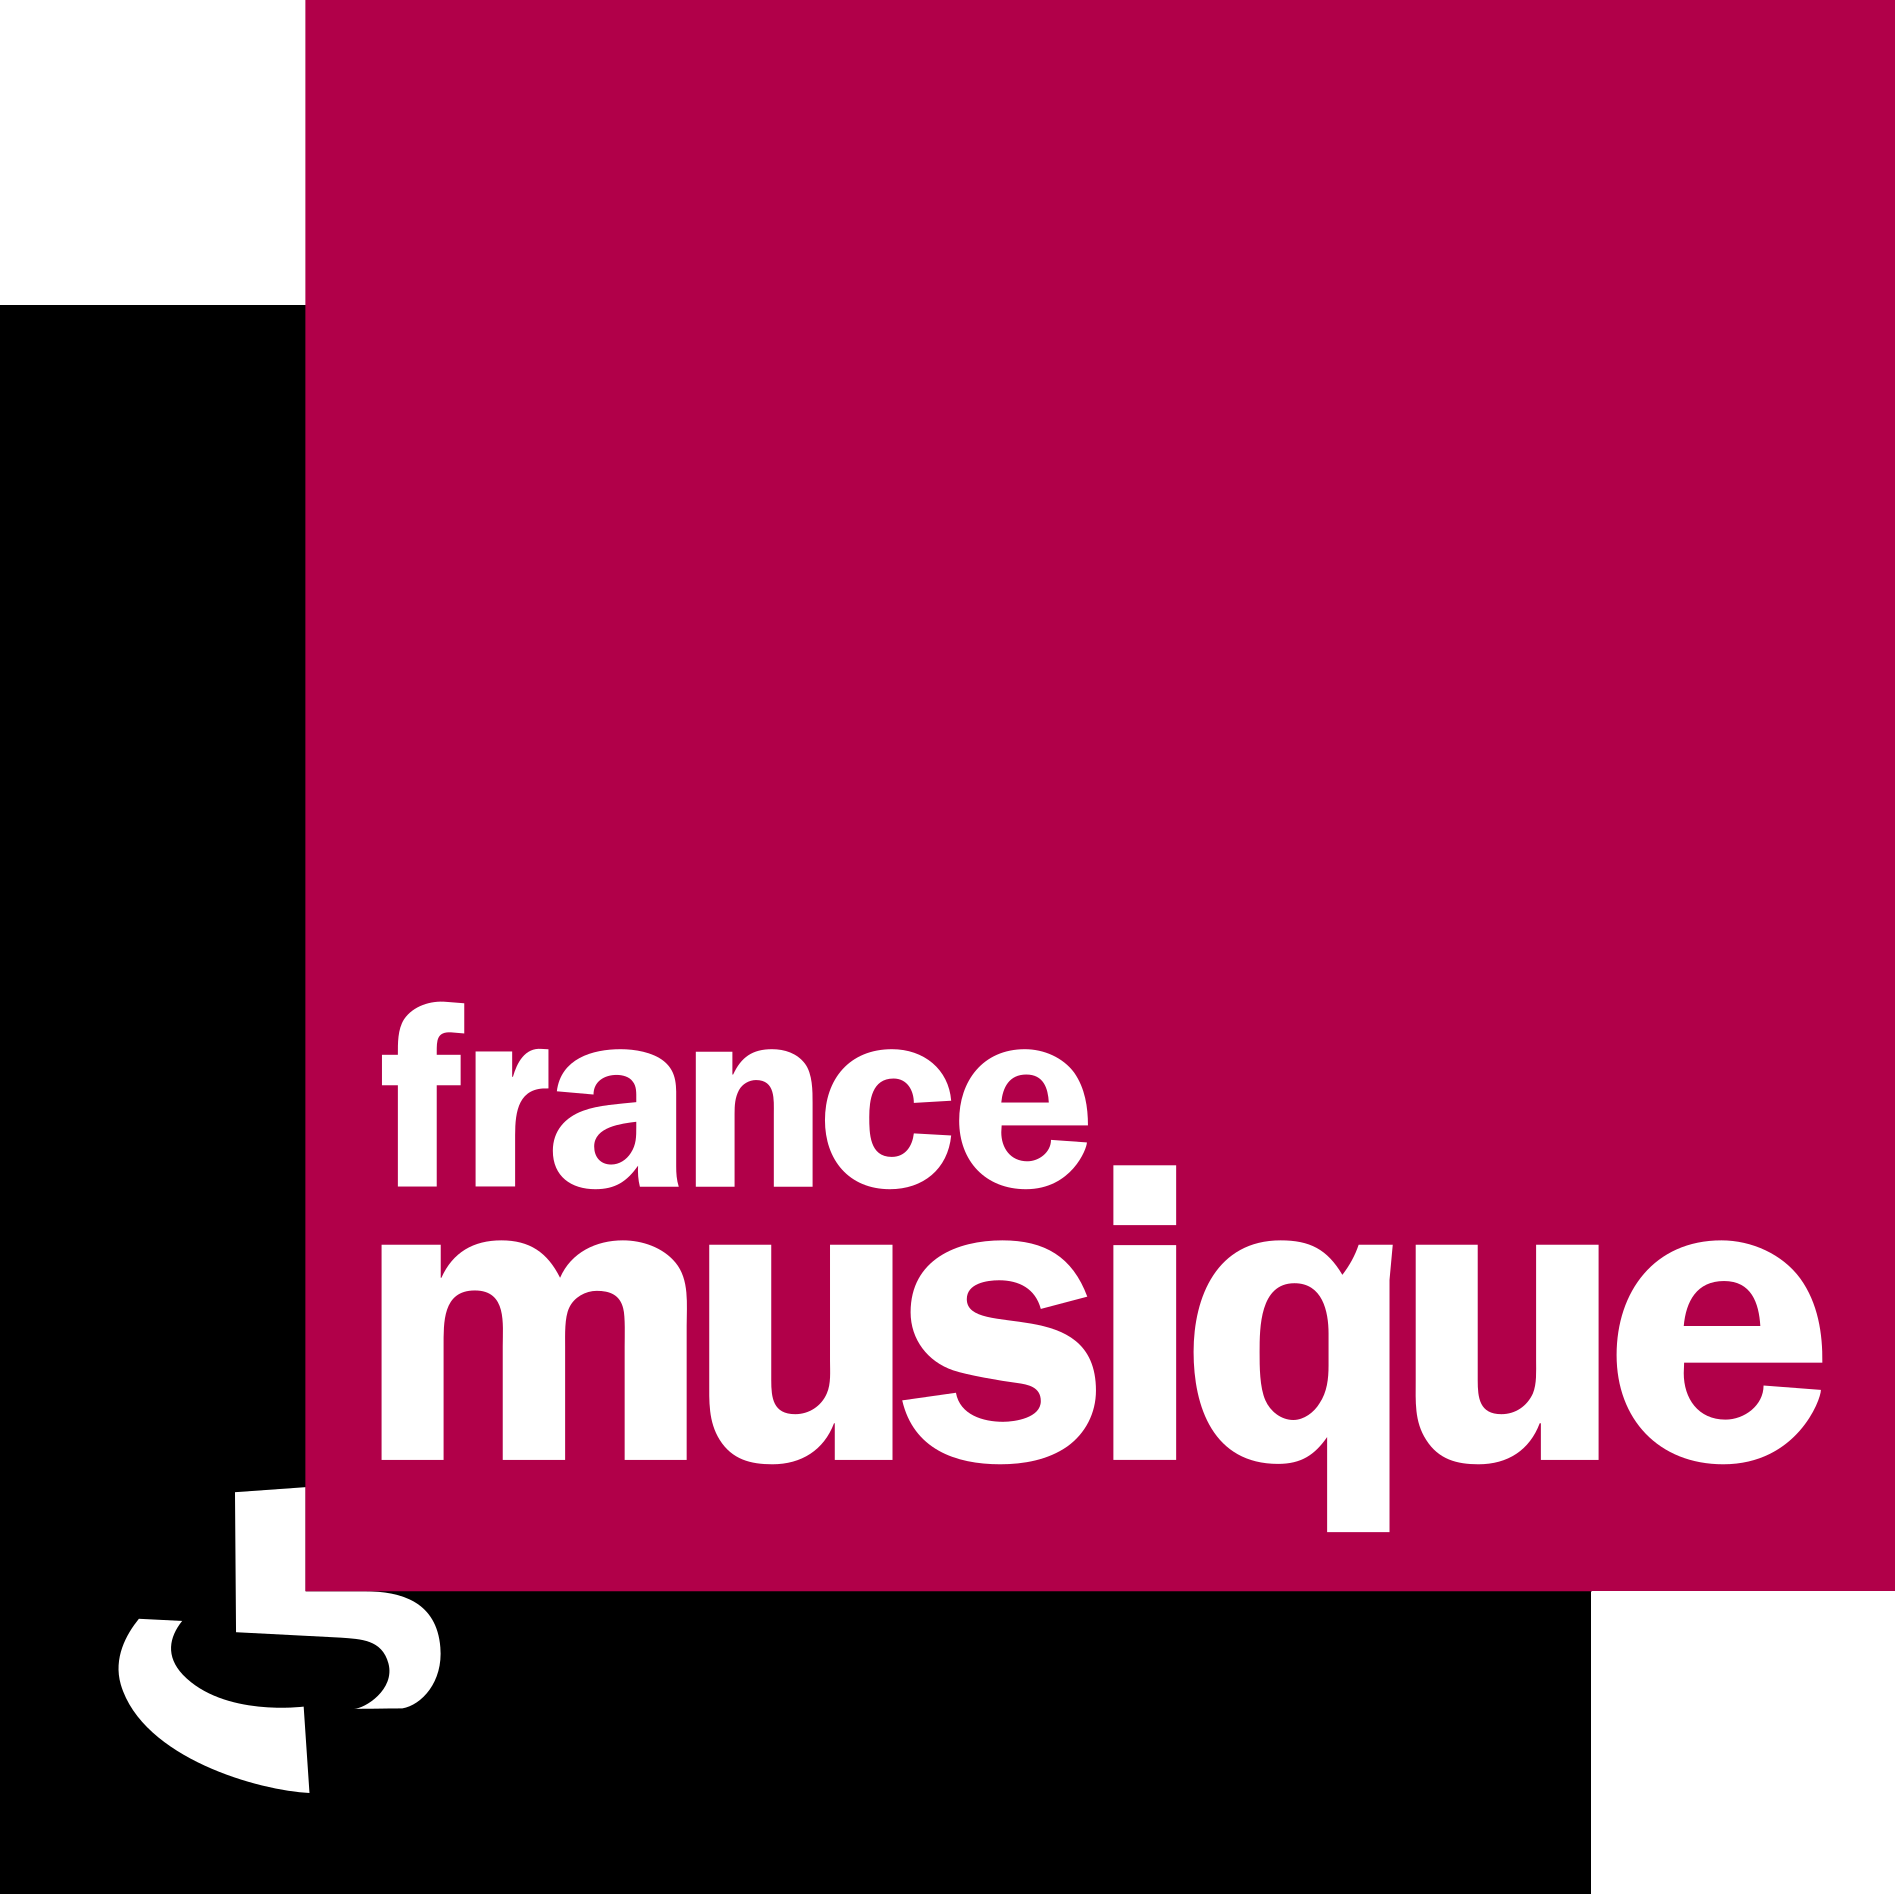 RFI Musique - - Profile - Marie France, underground icon